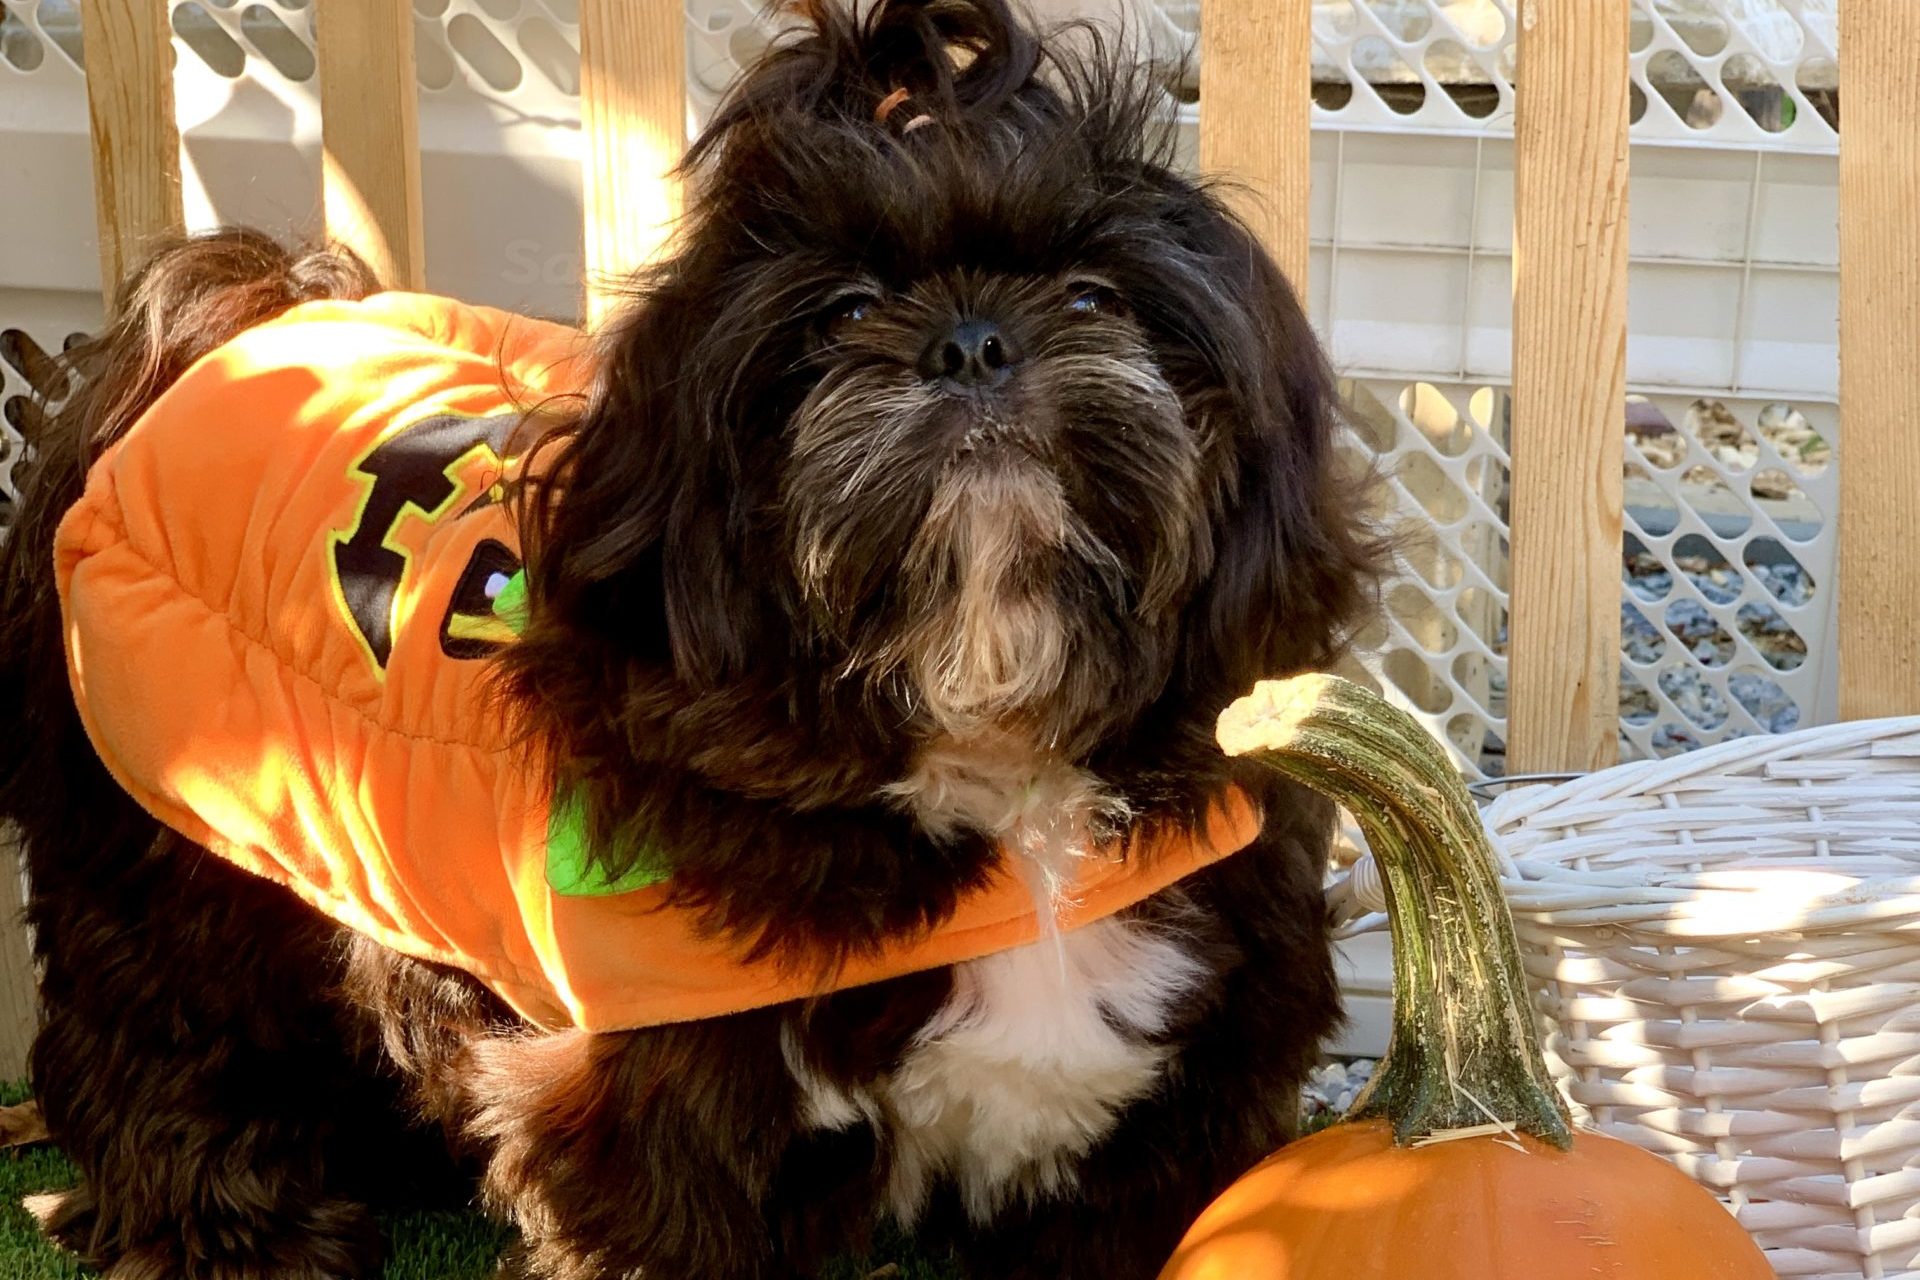 Black and white shih tzu dog next to pumpkins